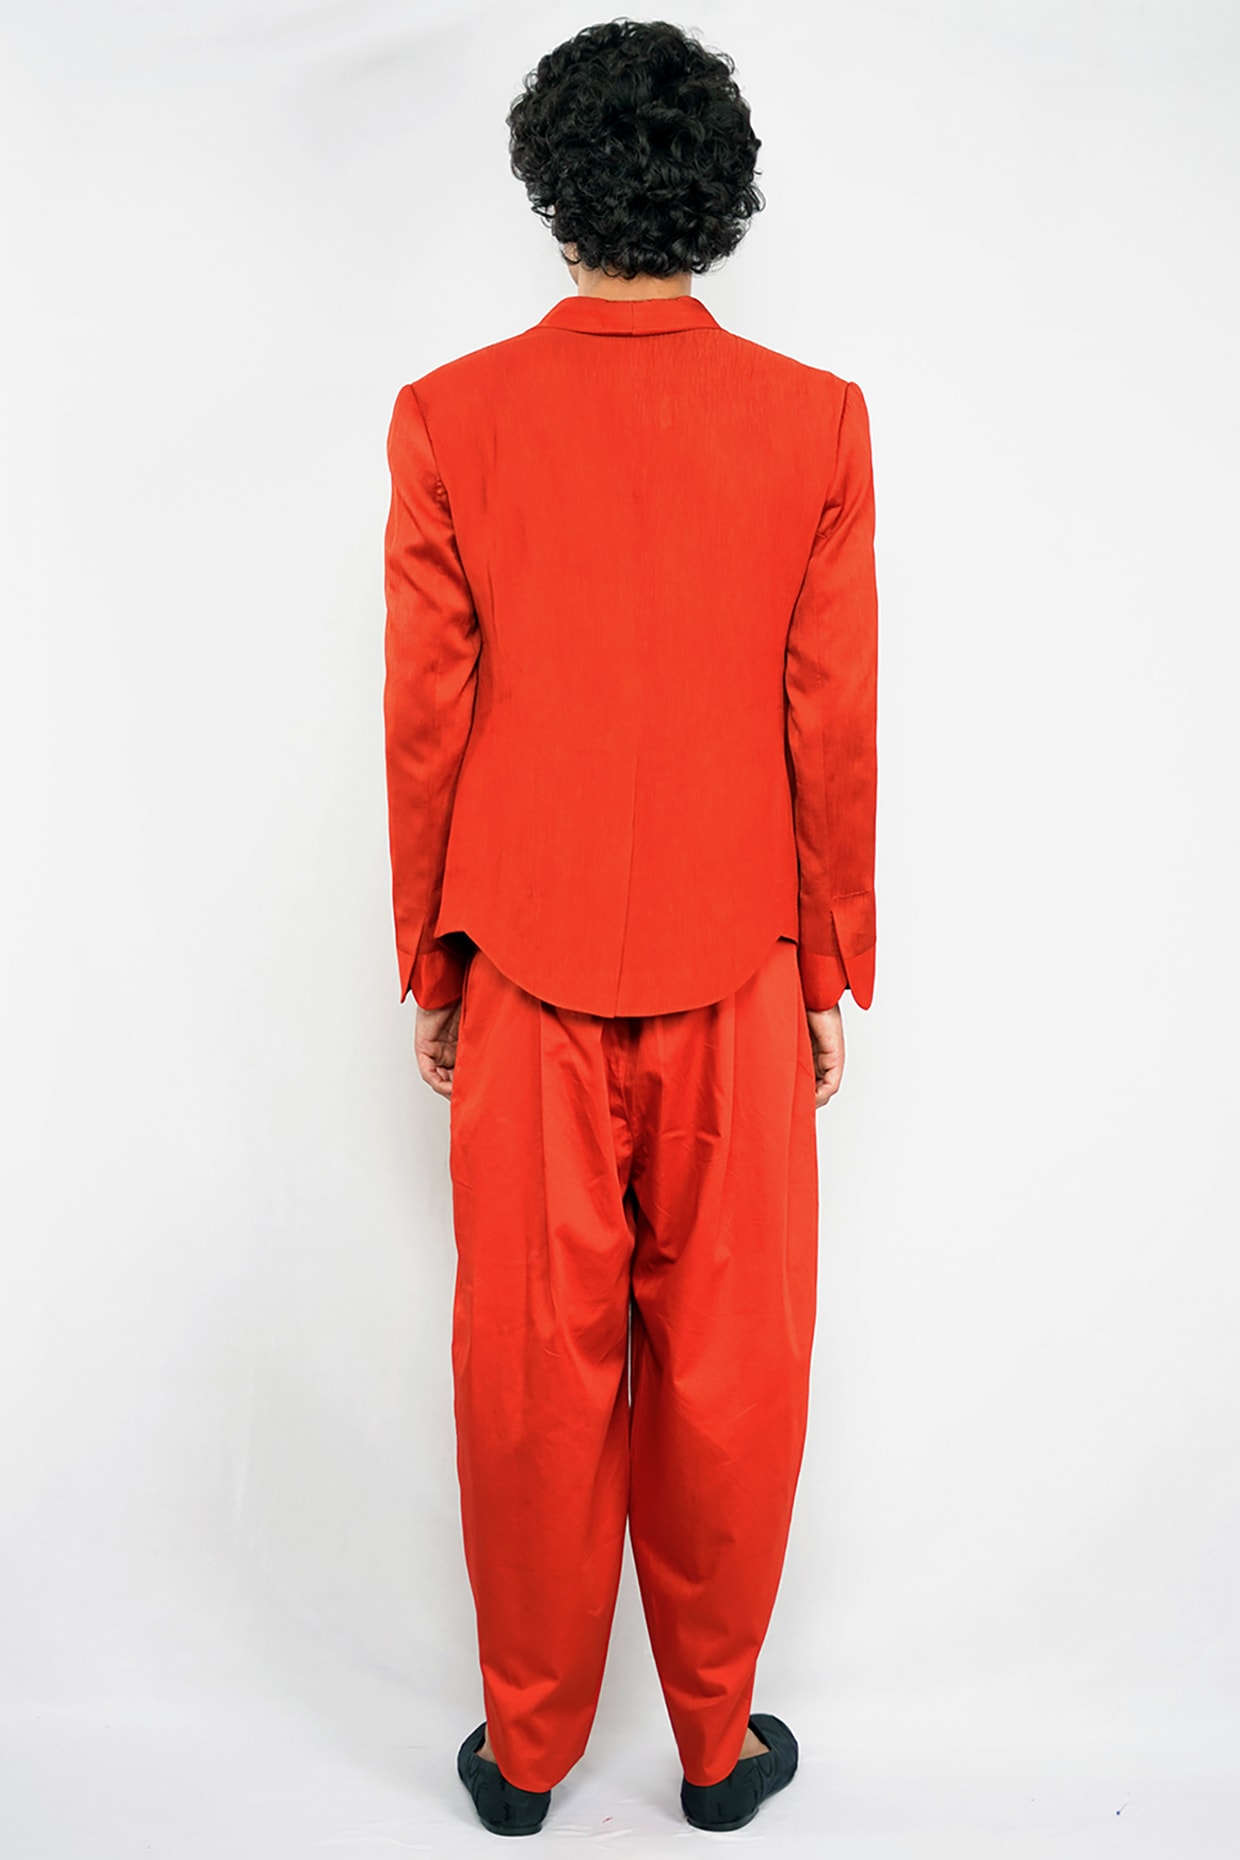 Orange Jacket and Trousers · Free Stock Photo